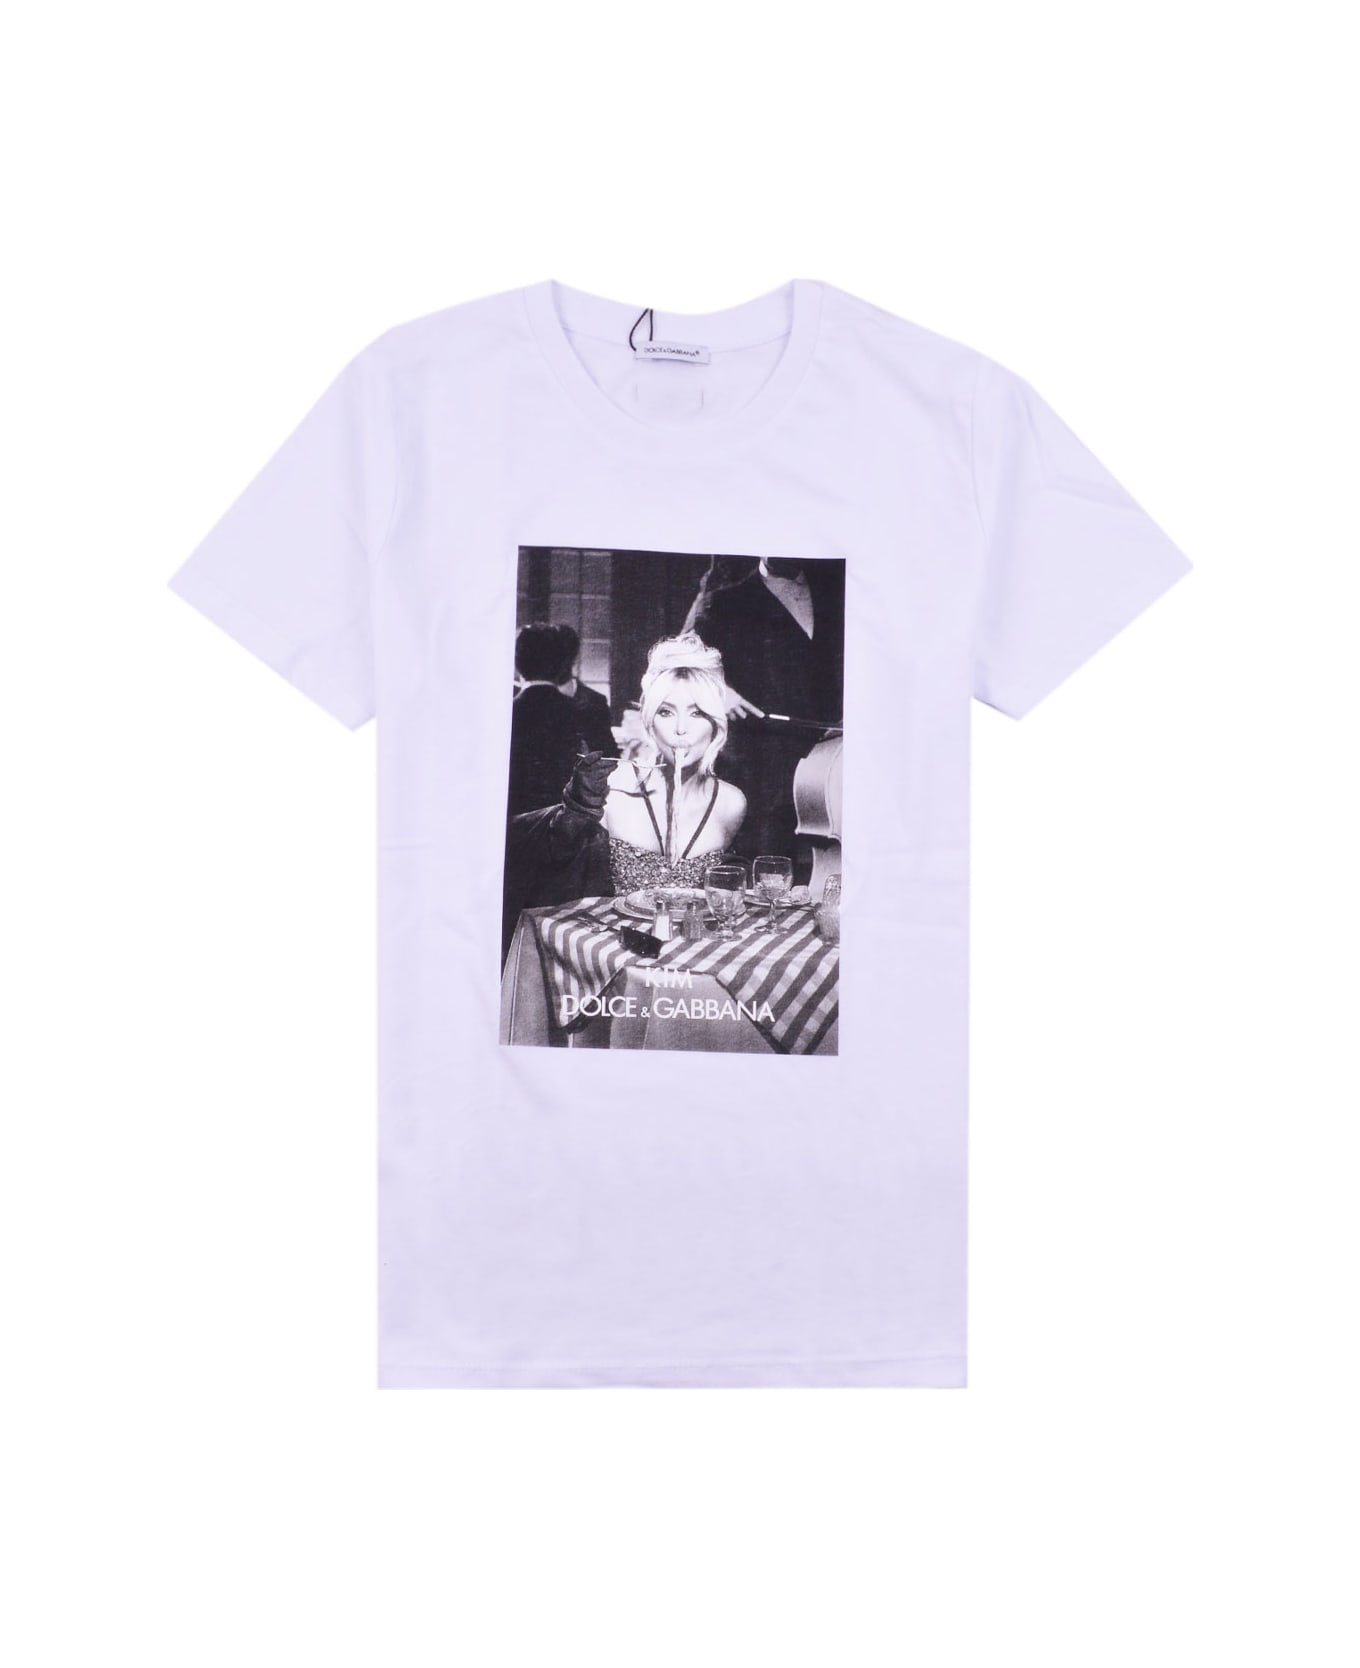 Dolce & Gabbana Printed T-shirt - White